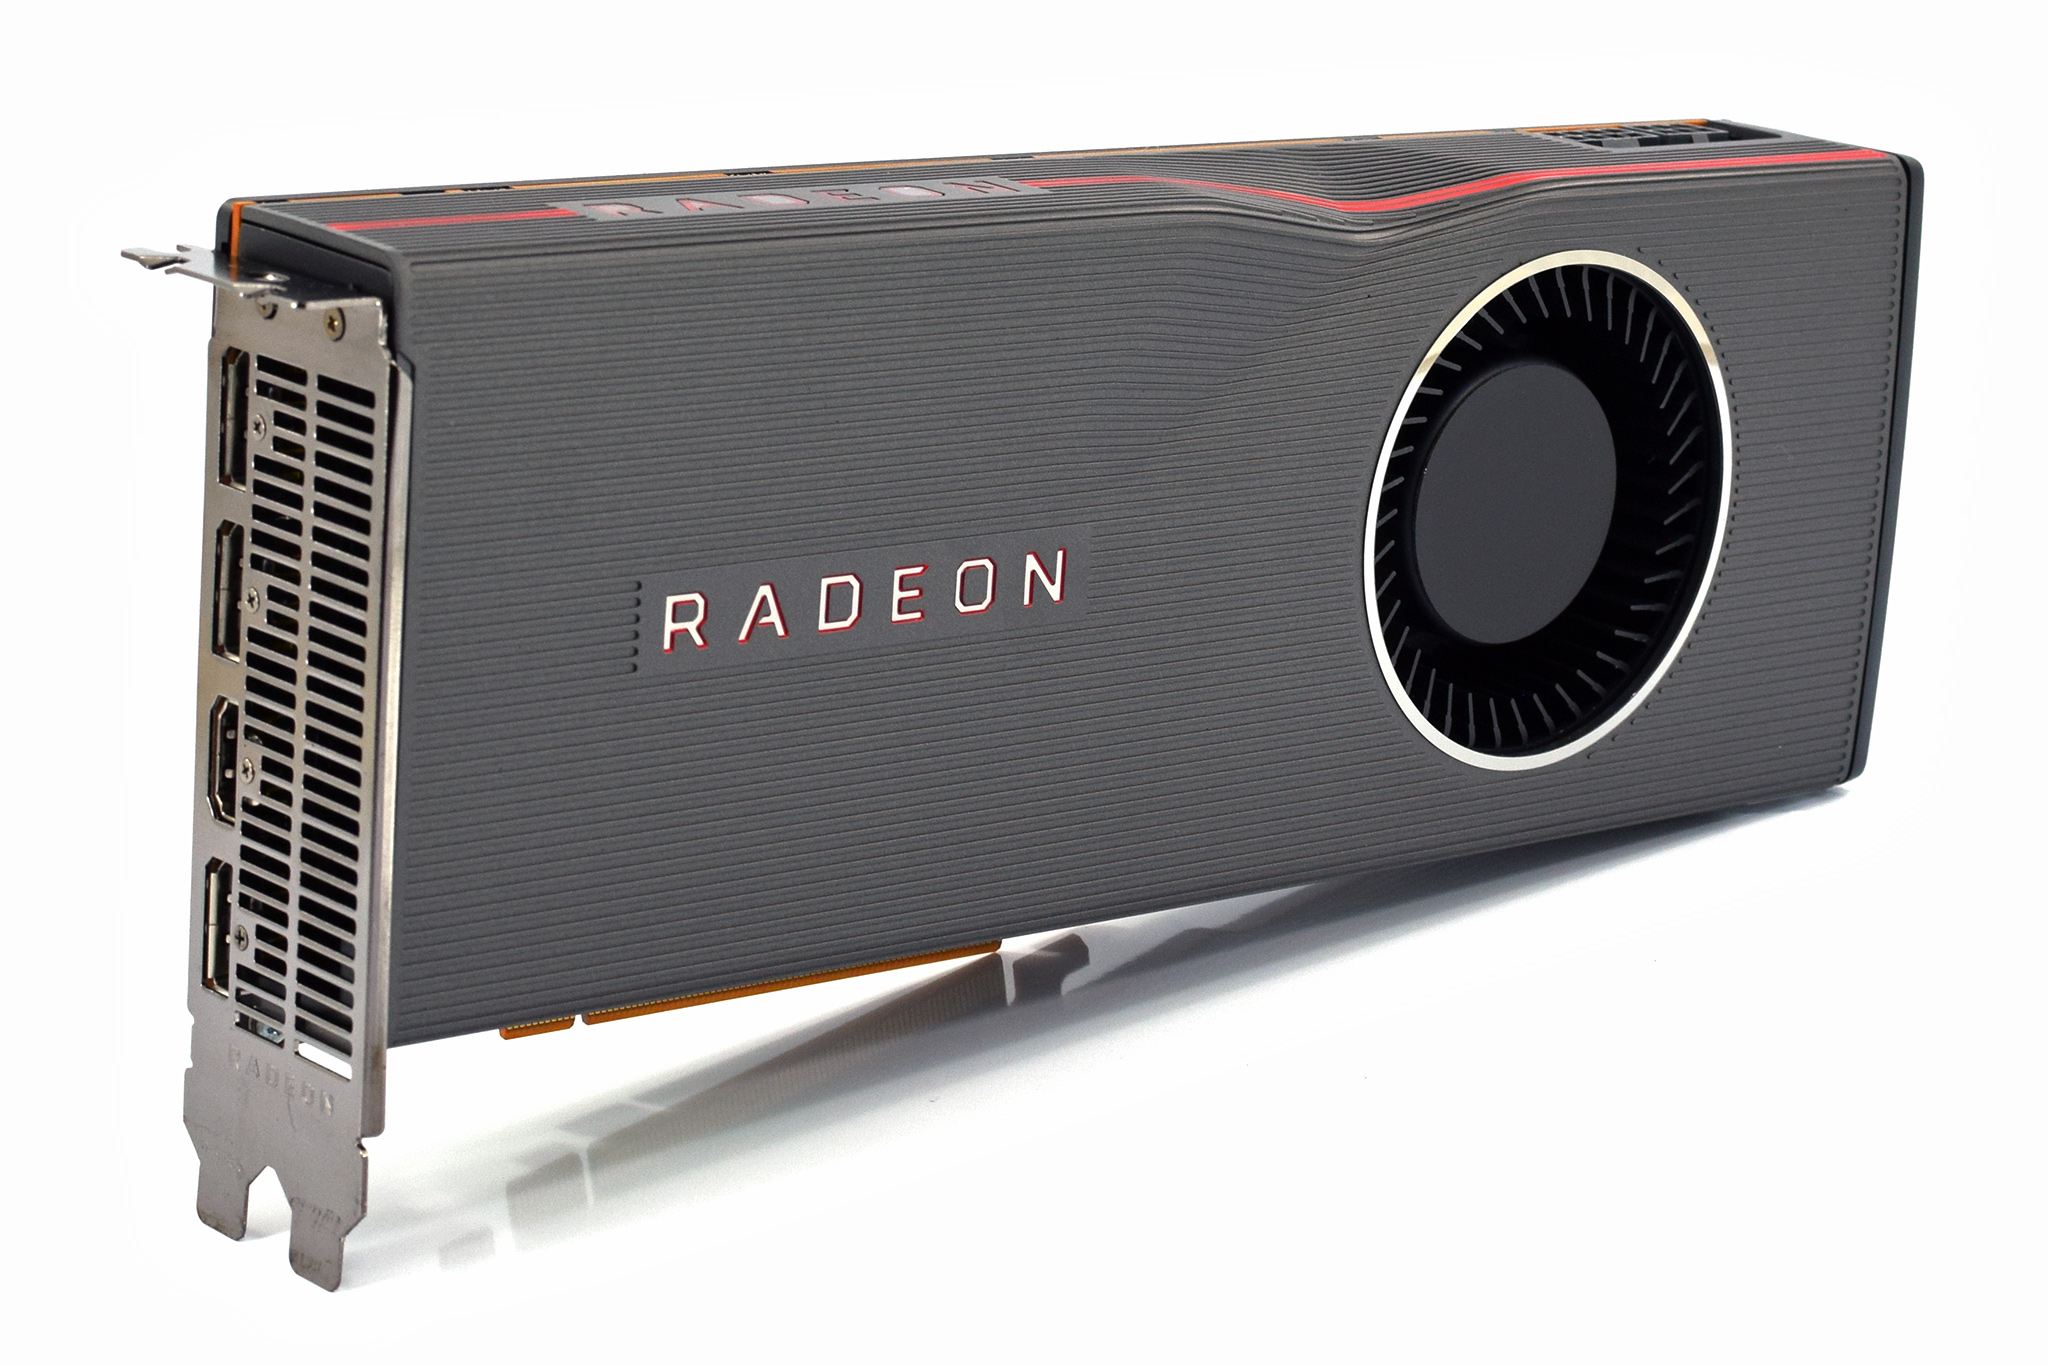 AMD Radeon RX 5700 XT 8GB Review